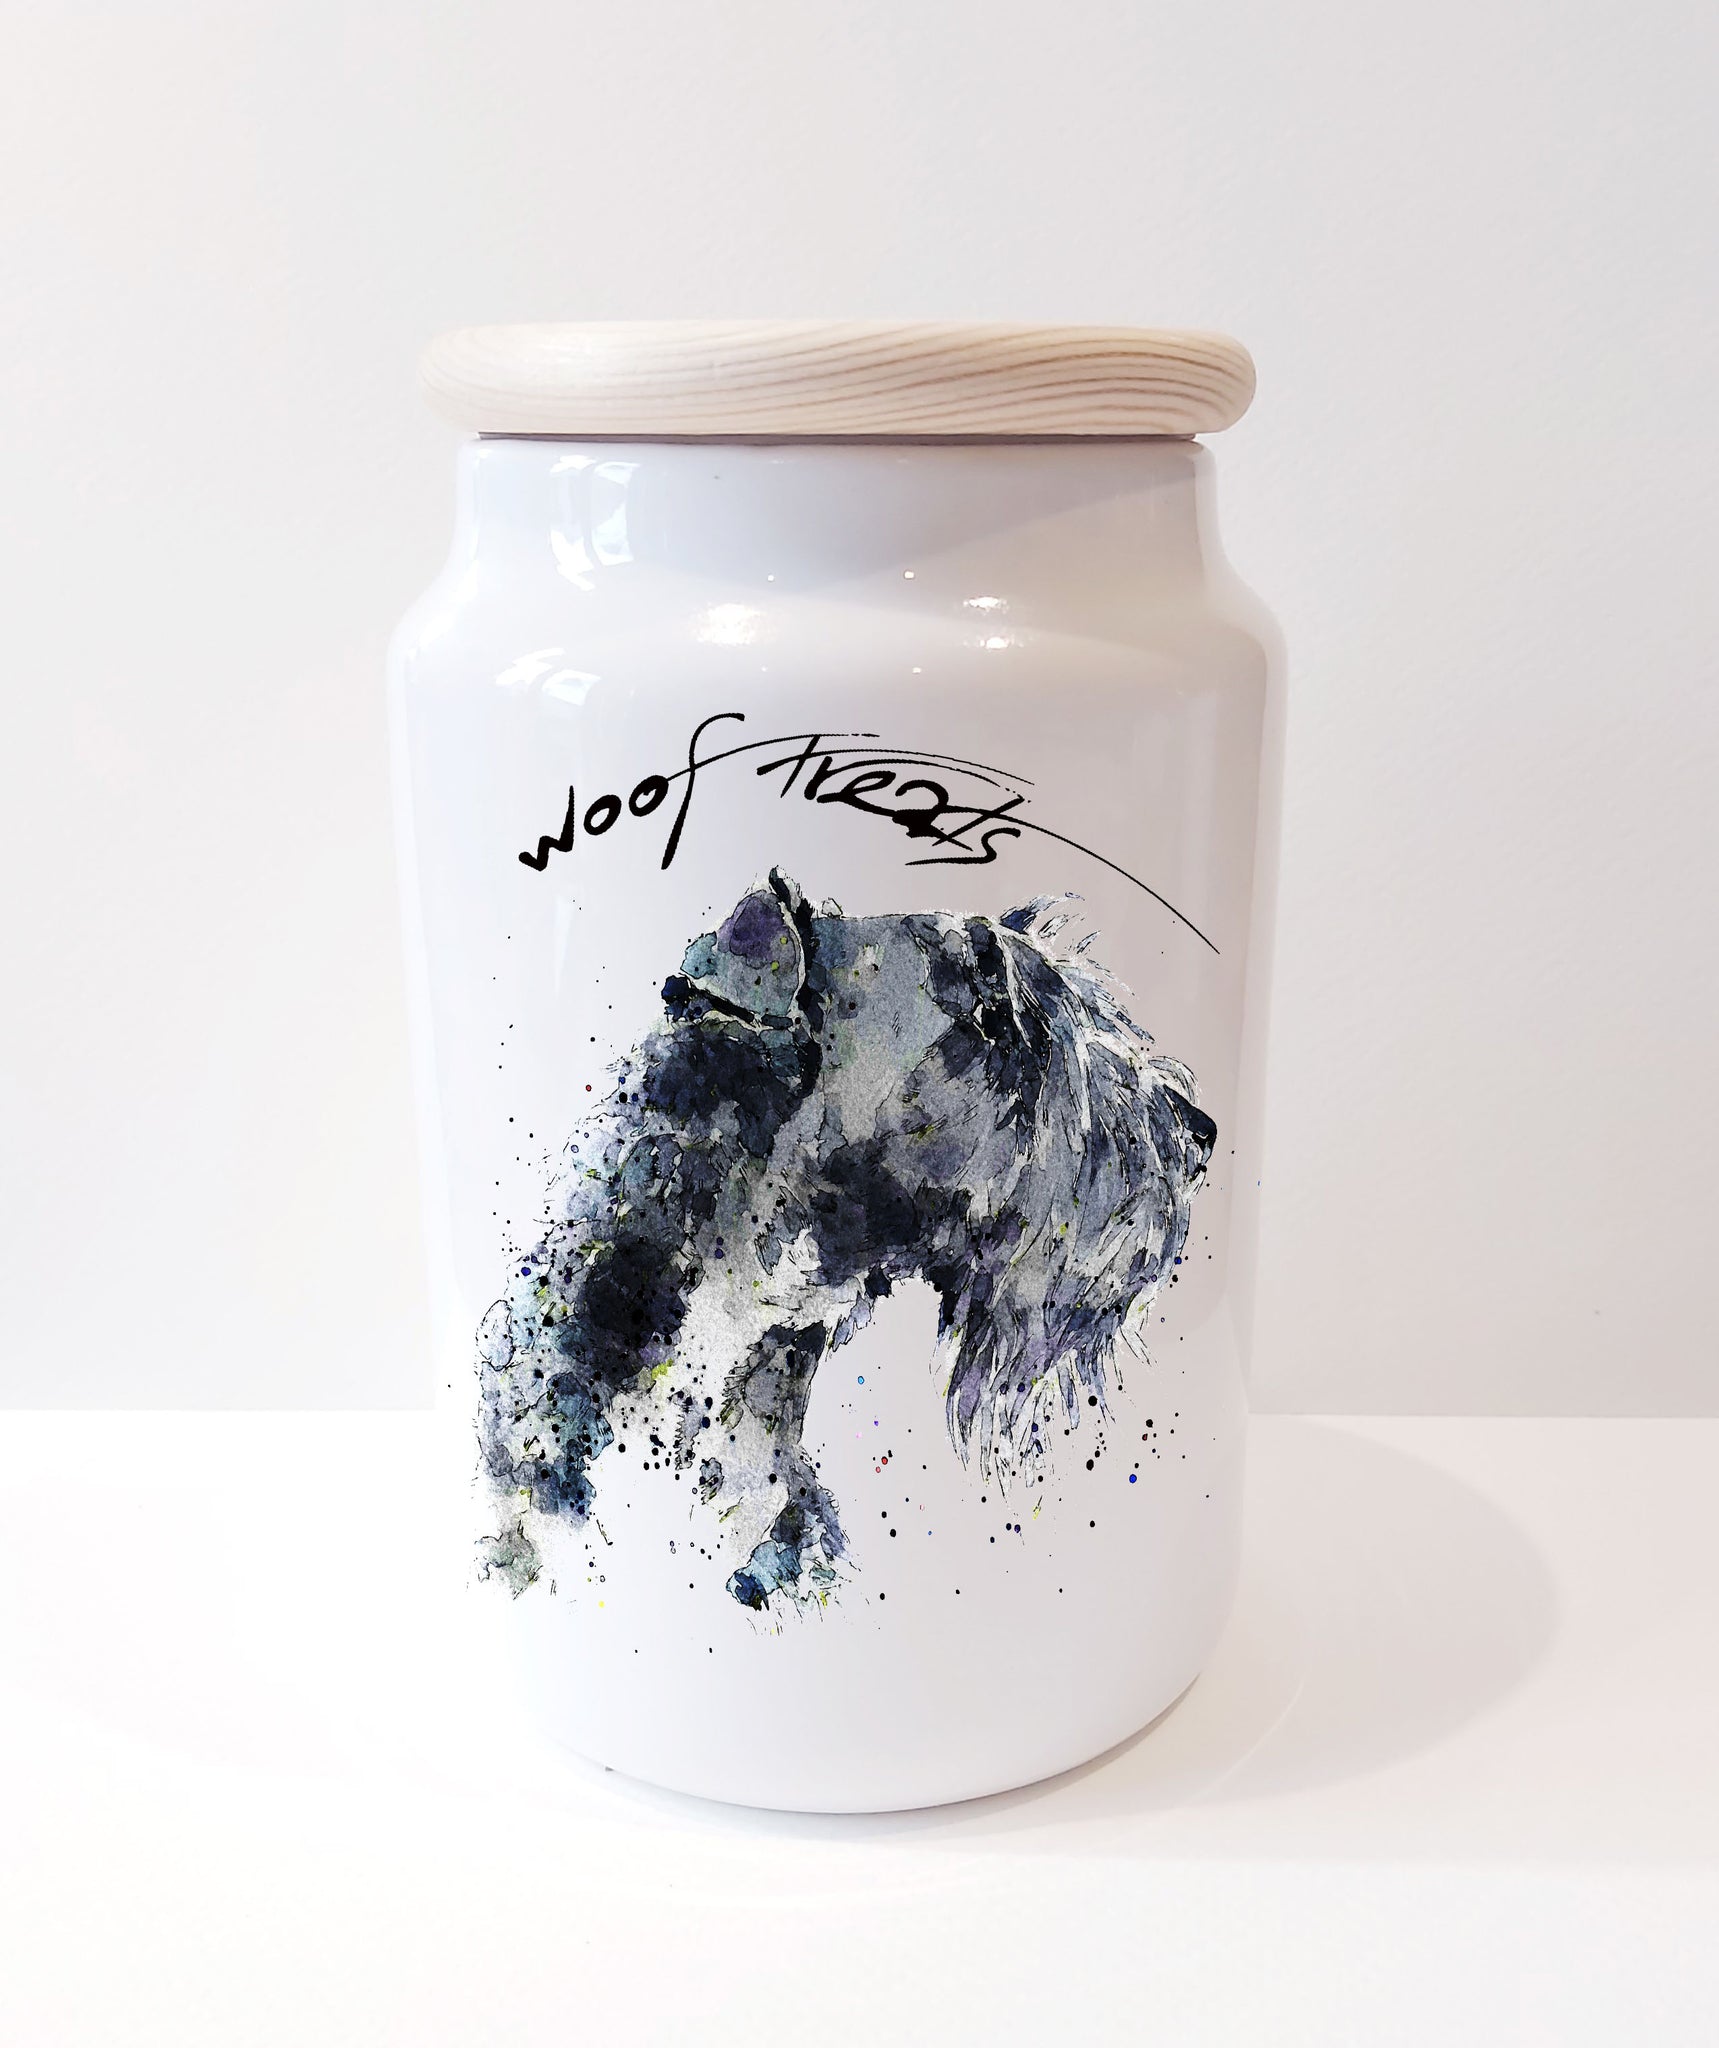 Kerry Blue Terrier Ceramic Treats Jar.Kerry Blue Terrier Canister,KBT jar,KBT Doggie treats container.